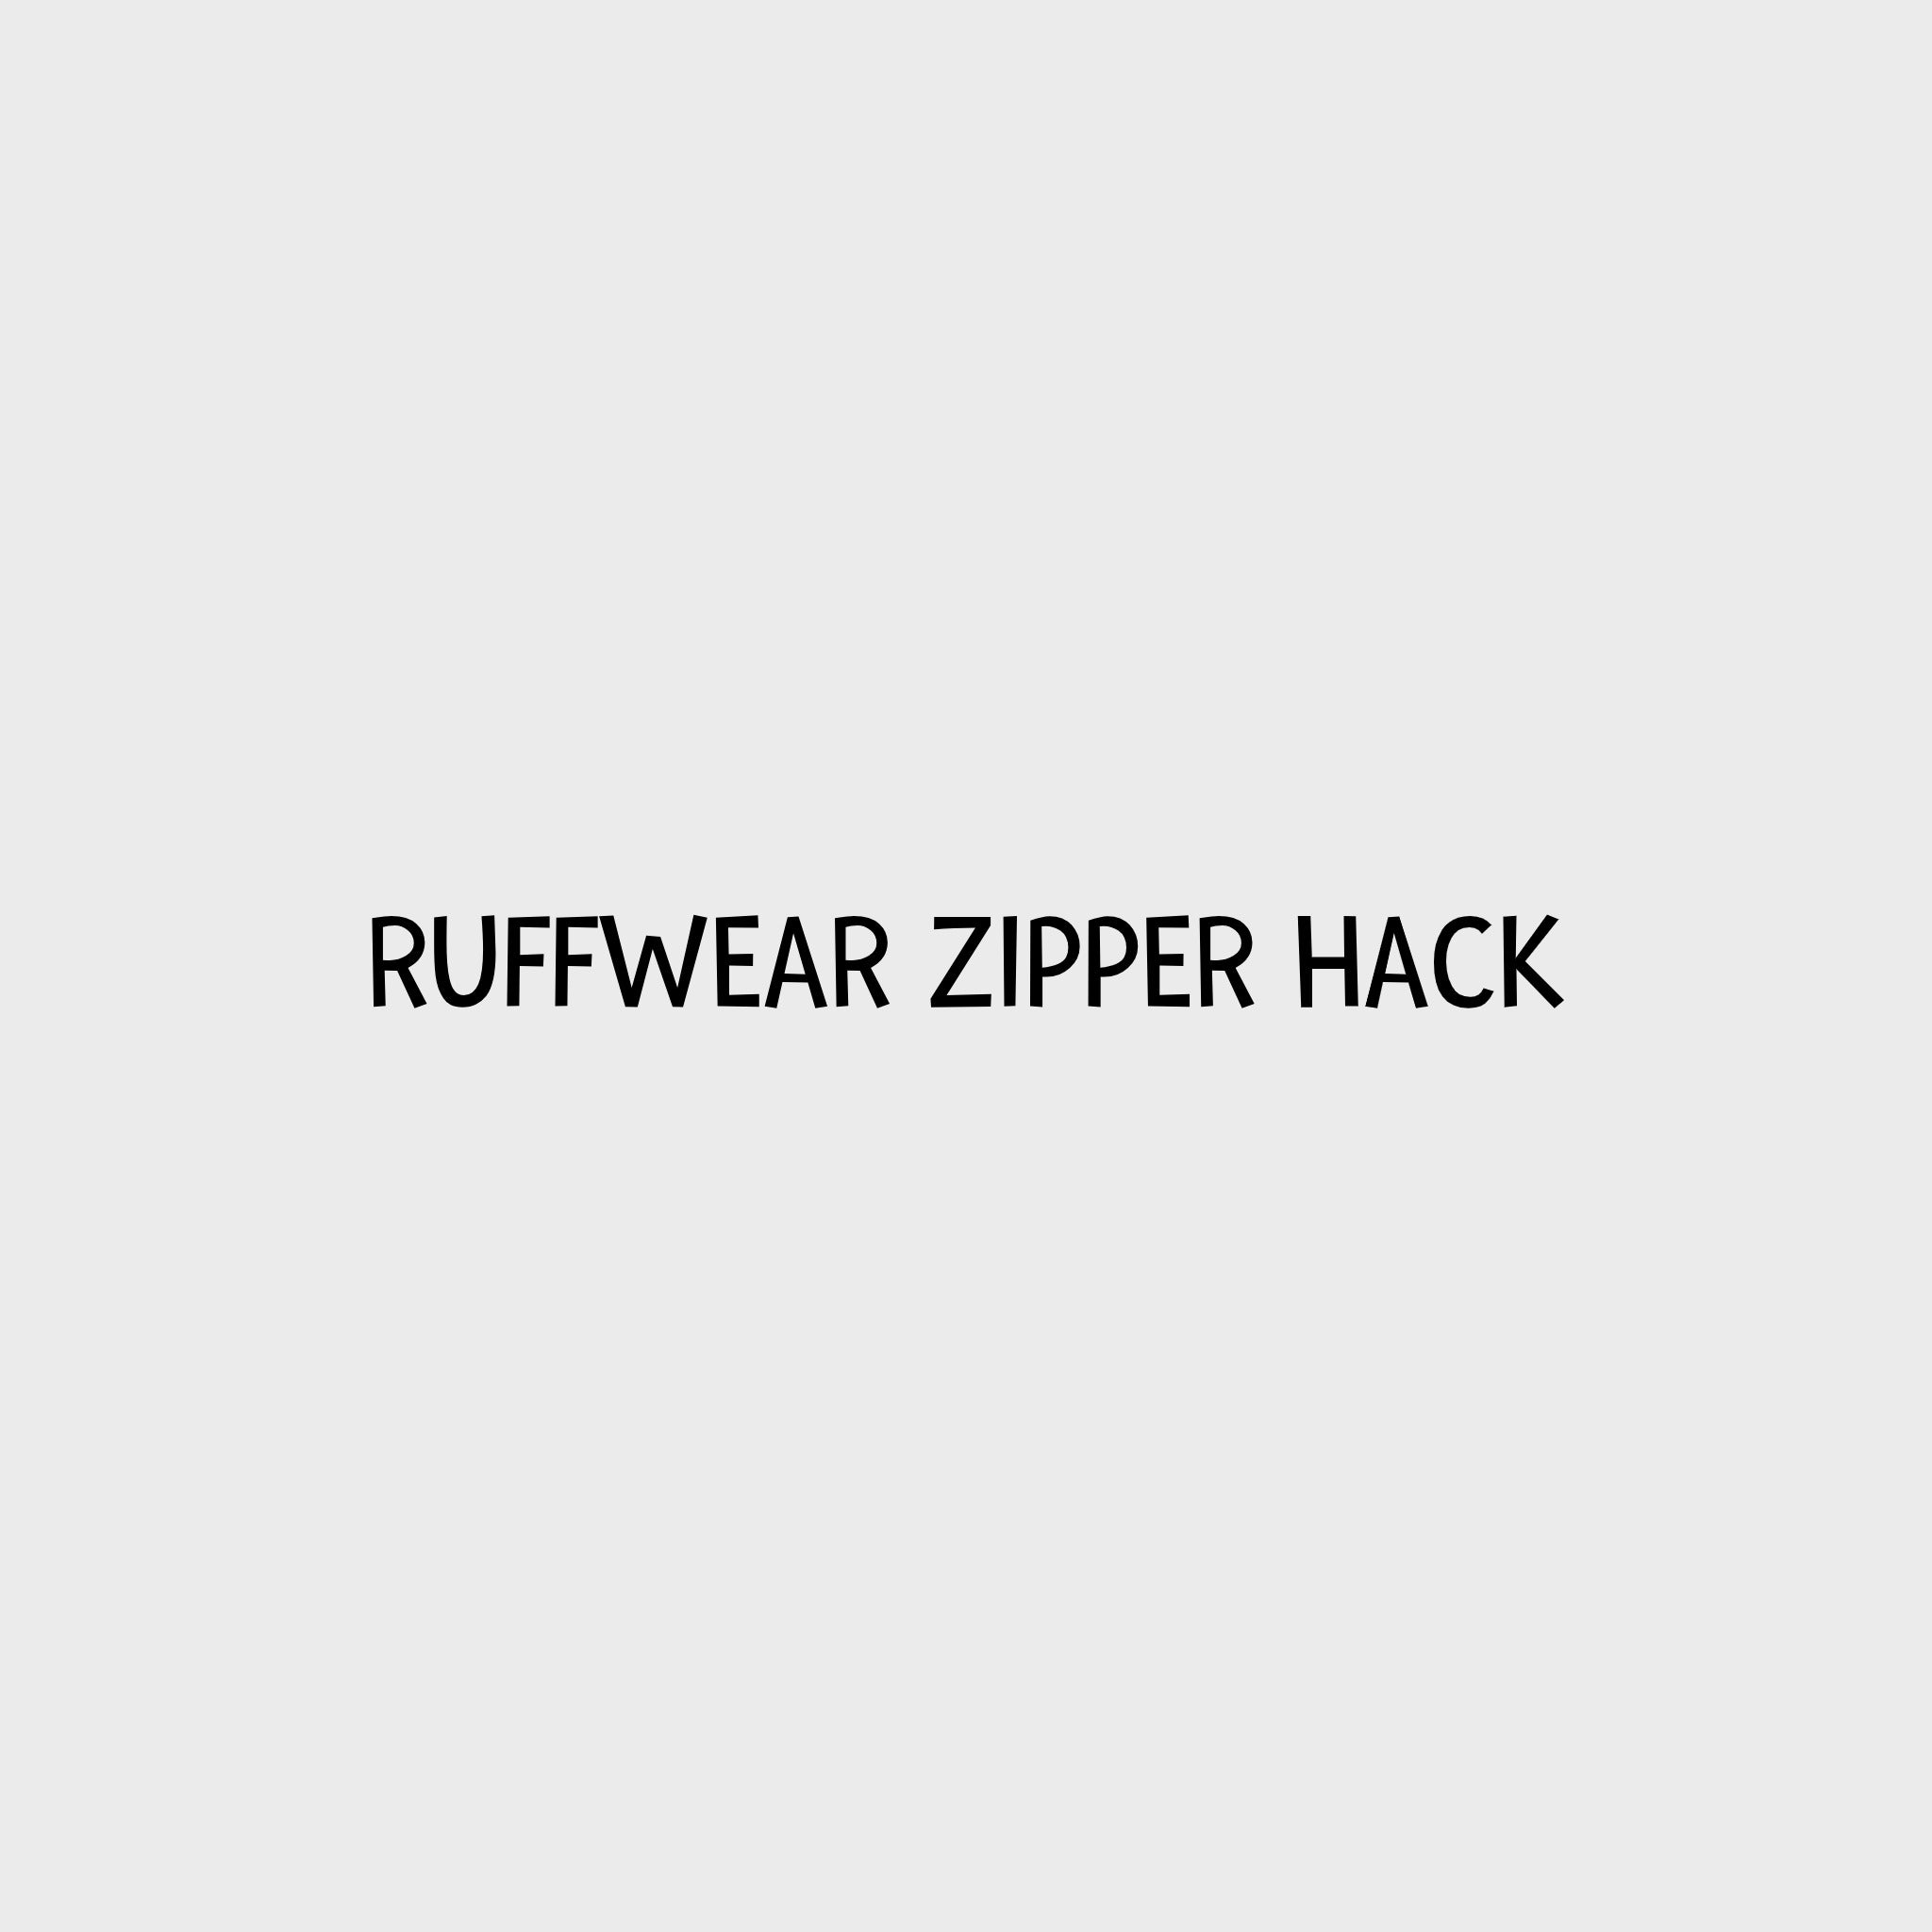 Video - Ruffwear Zipper Hack